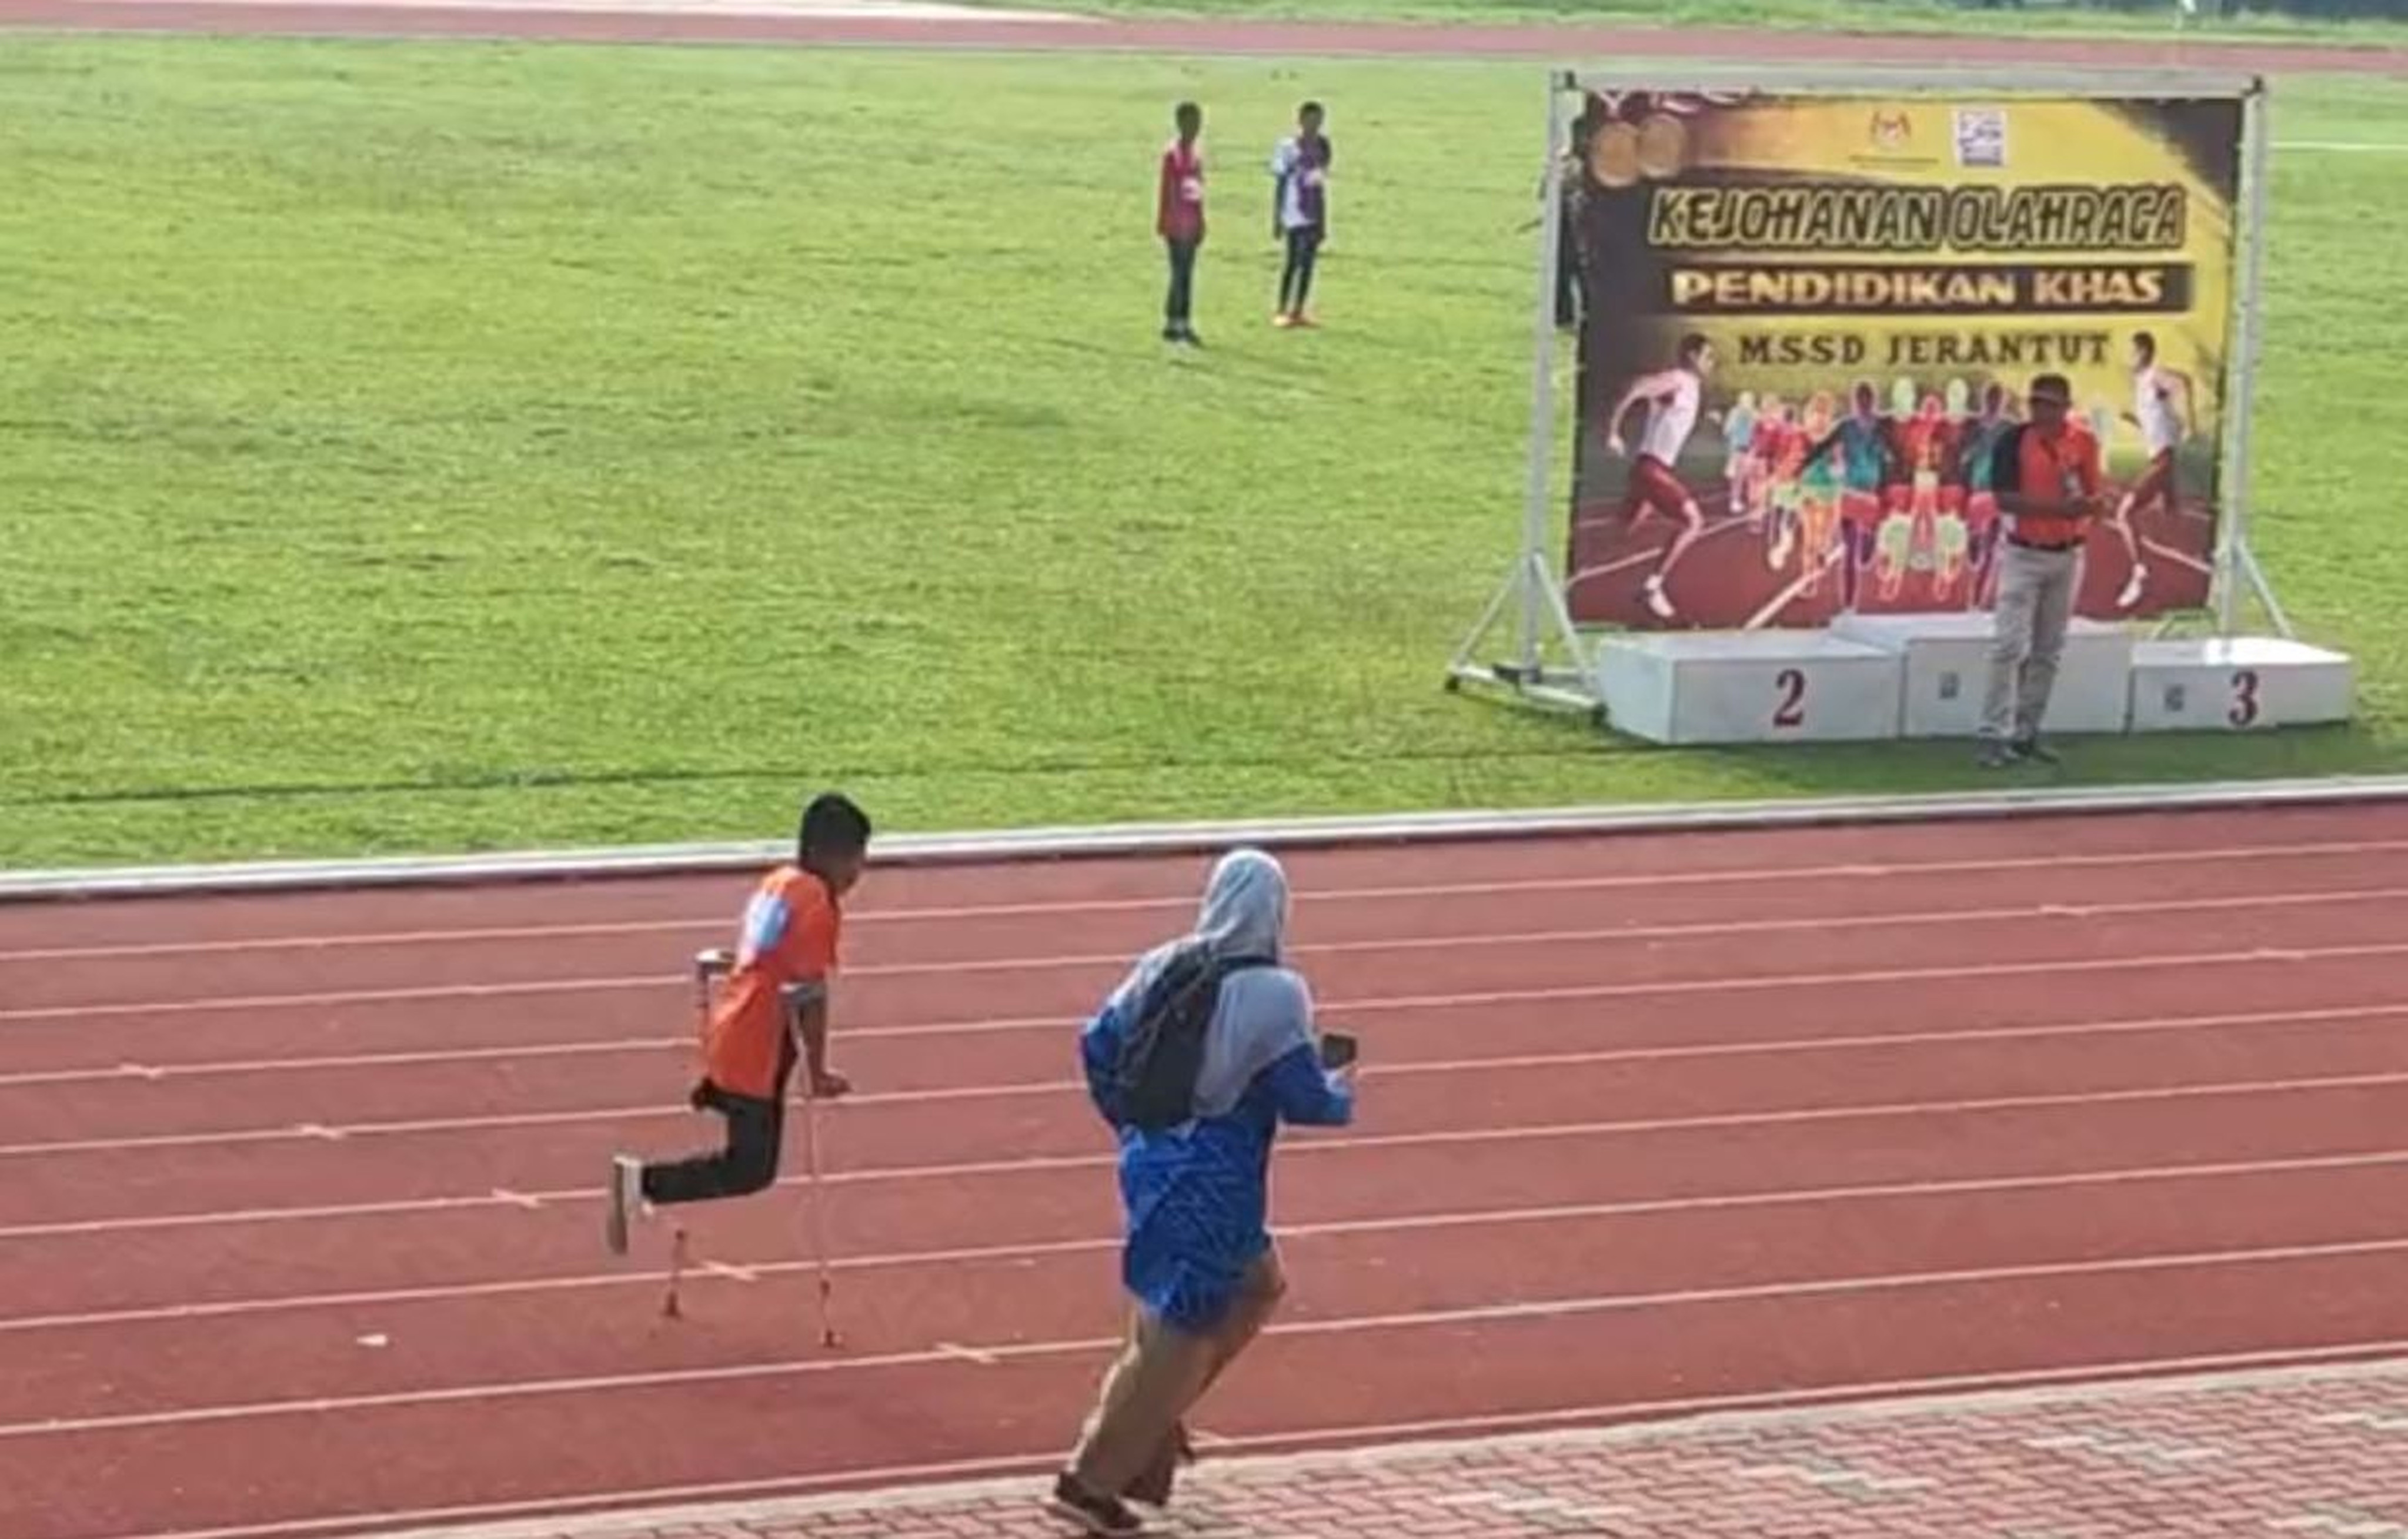 A teacher is seen running alongside her student to encourage him to cross the finish line at a Malaysian school sports event. Photo: TikTok/@faridkamaruddin18